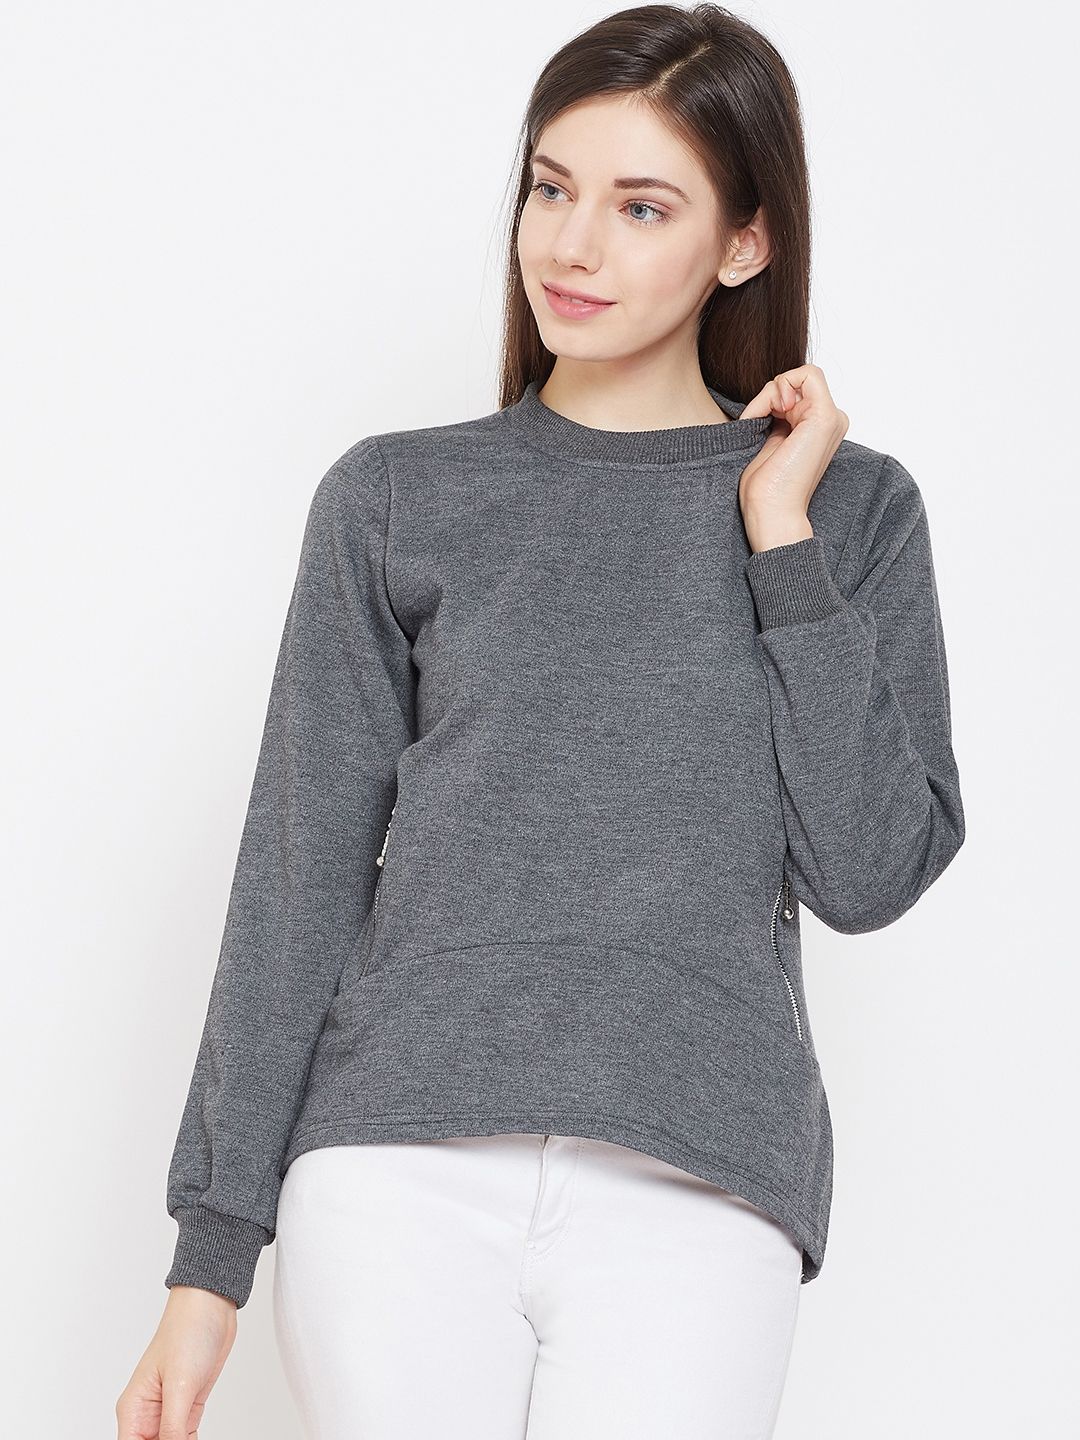 Belle Fille Women Charcoal Grey Solid Sweatshirt Price in India